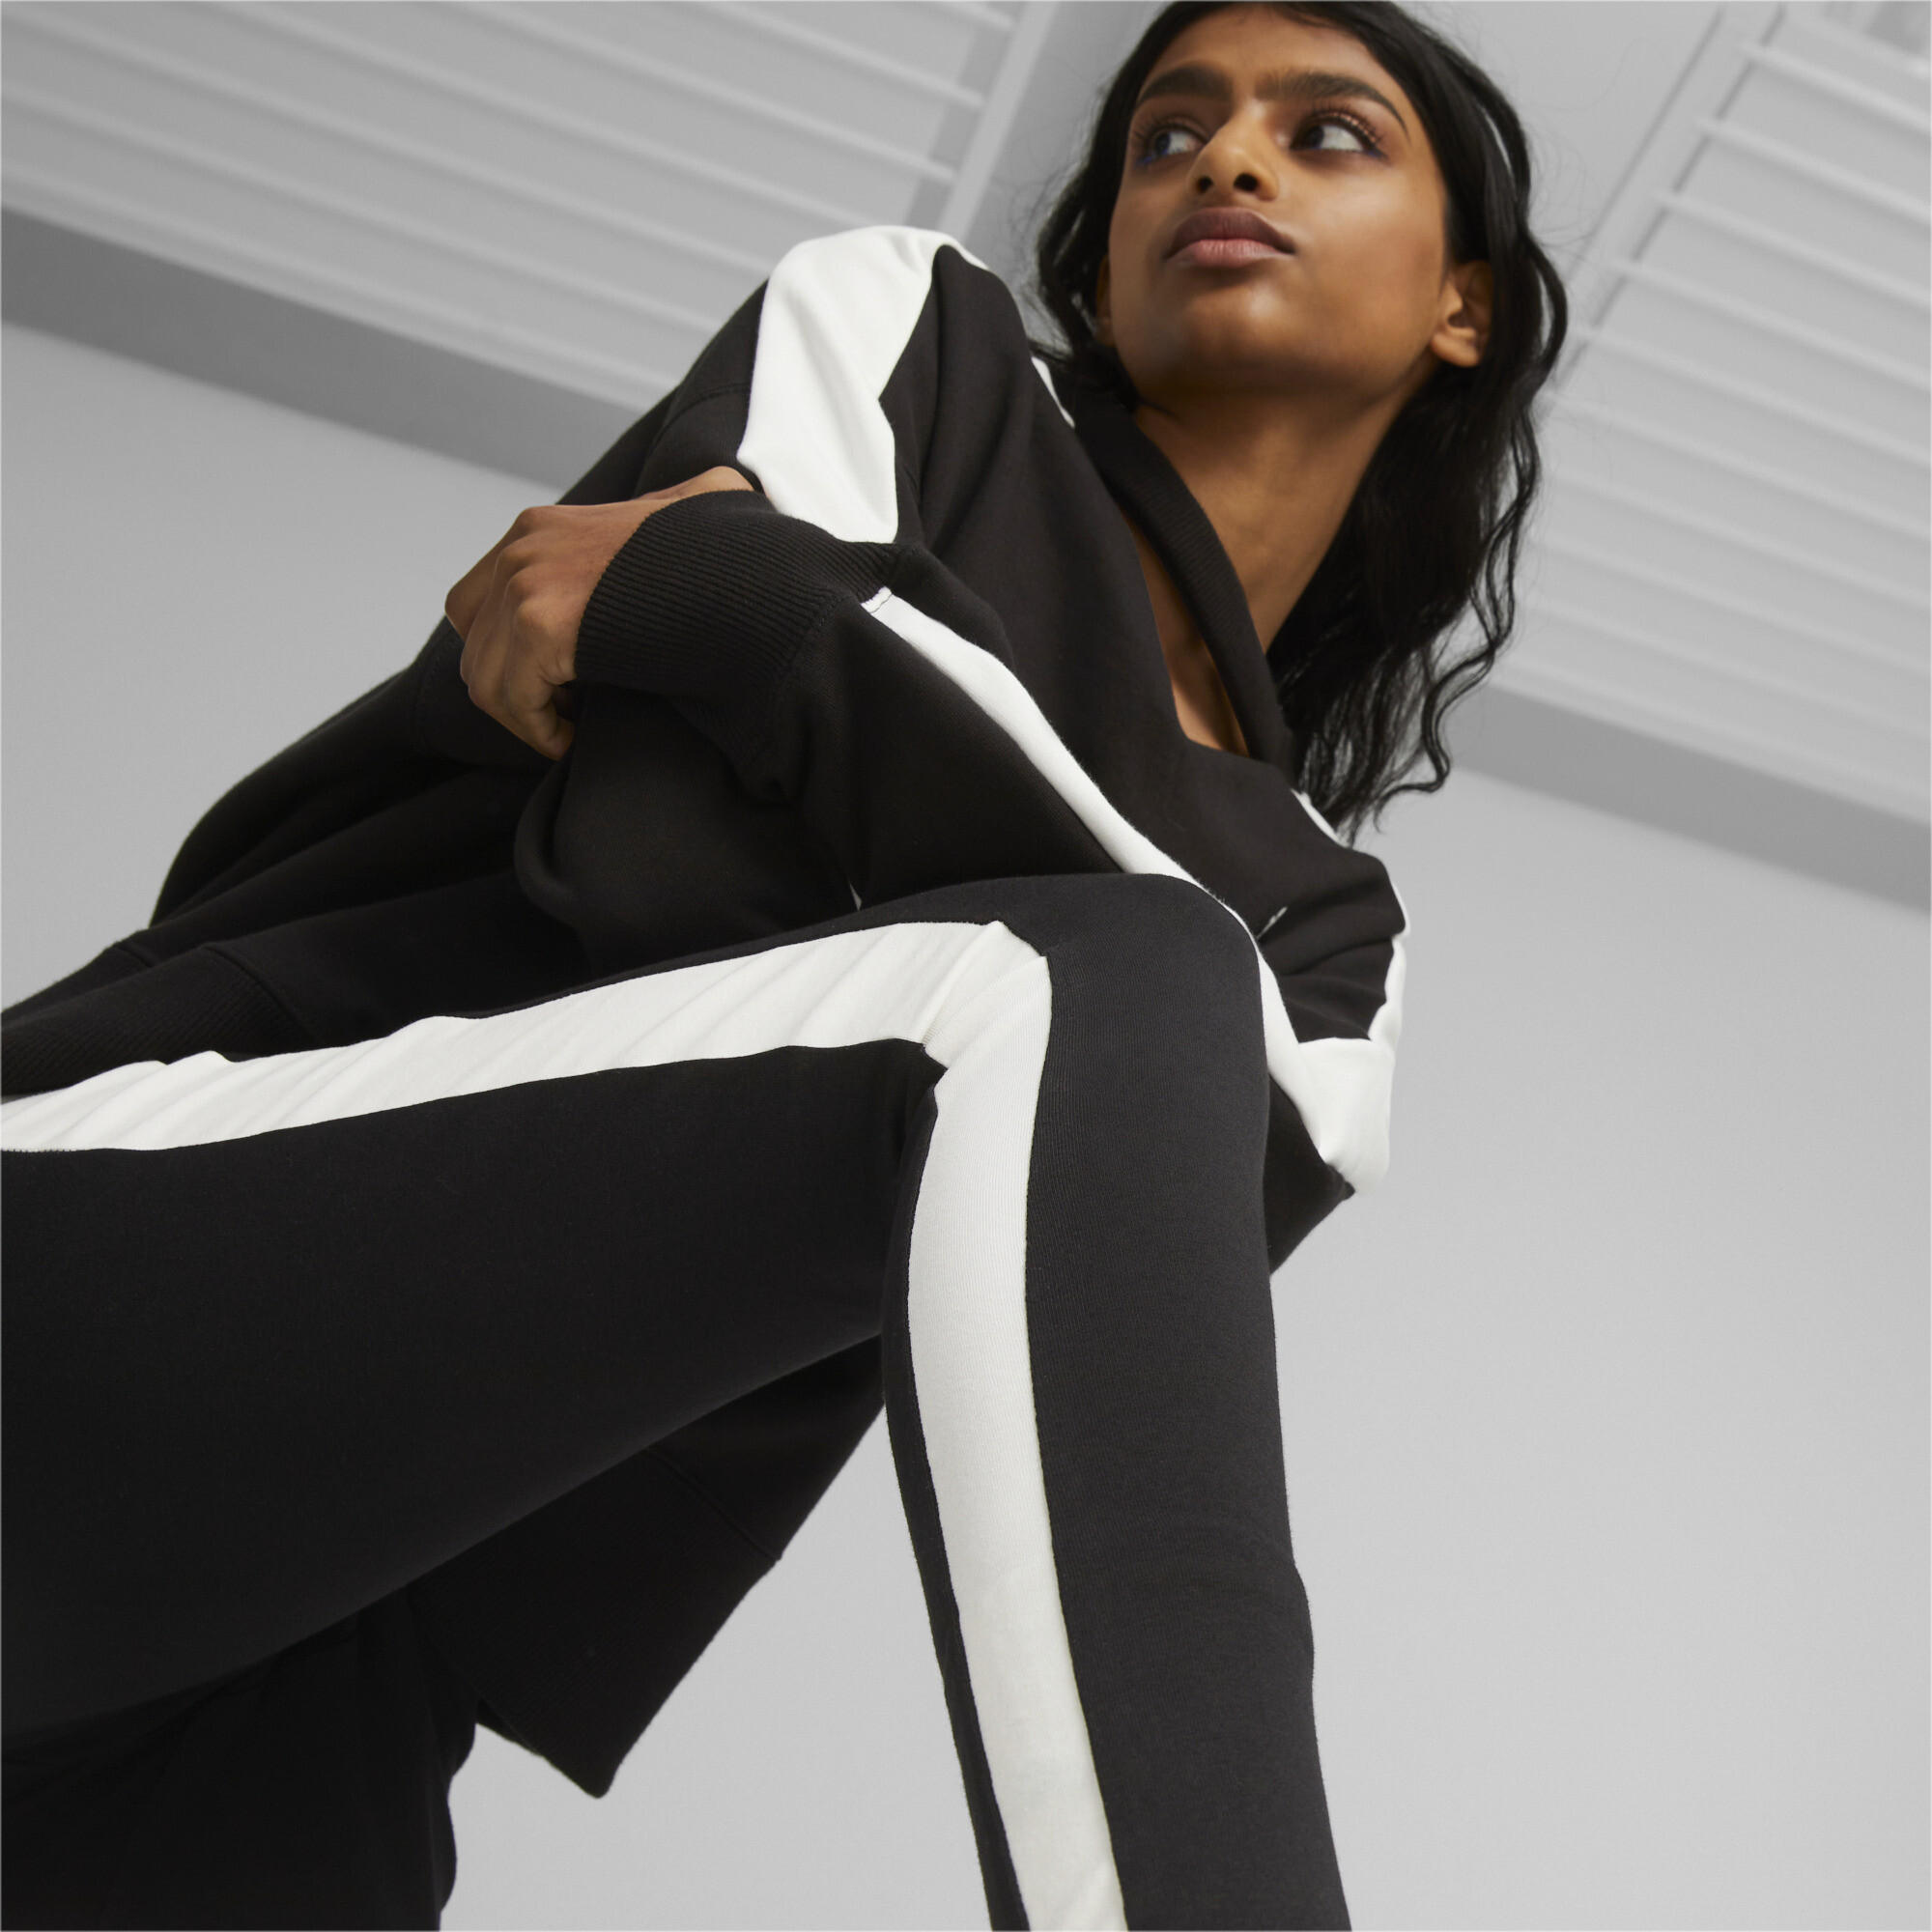 Women's Puma Iconic T7 Mid-Rise's Leggings, Black, Size 3XL, Clothing